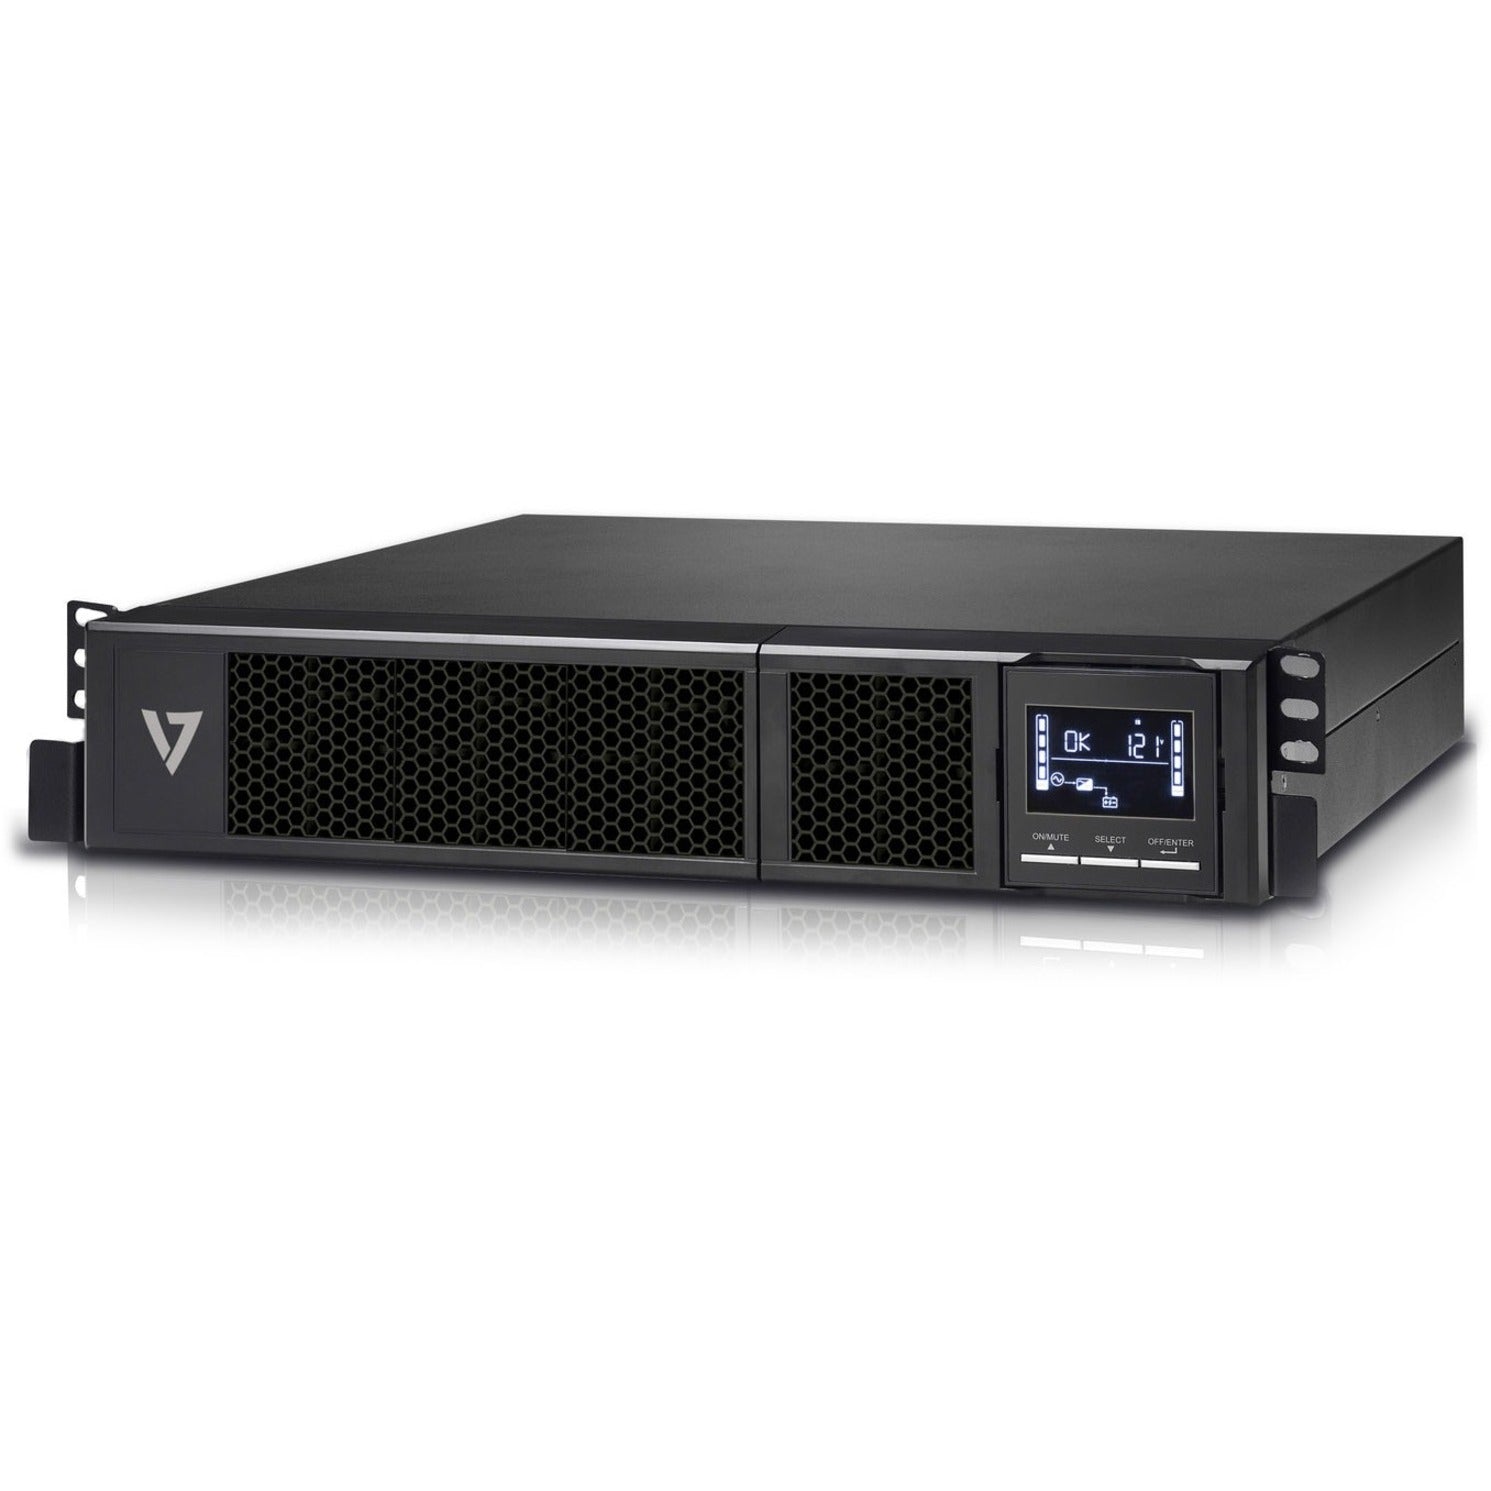 V7 UPS1RM2U1500-1N UPS 1500VA Rack Mount 2U US, Energy Star, 3 Year Warranty, USB, 120V AC Input Voltage